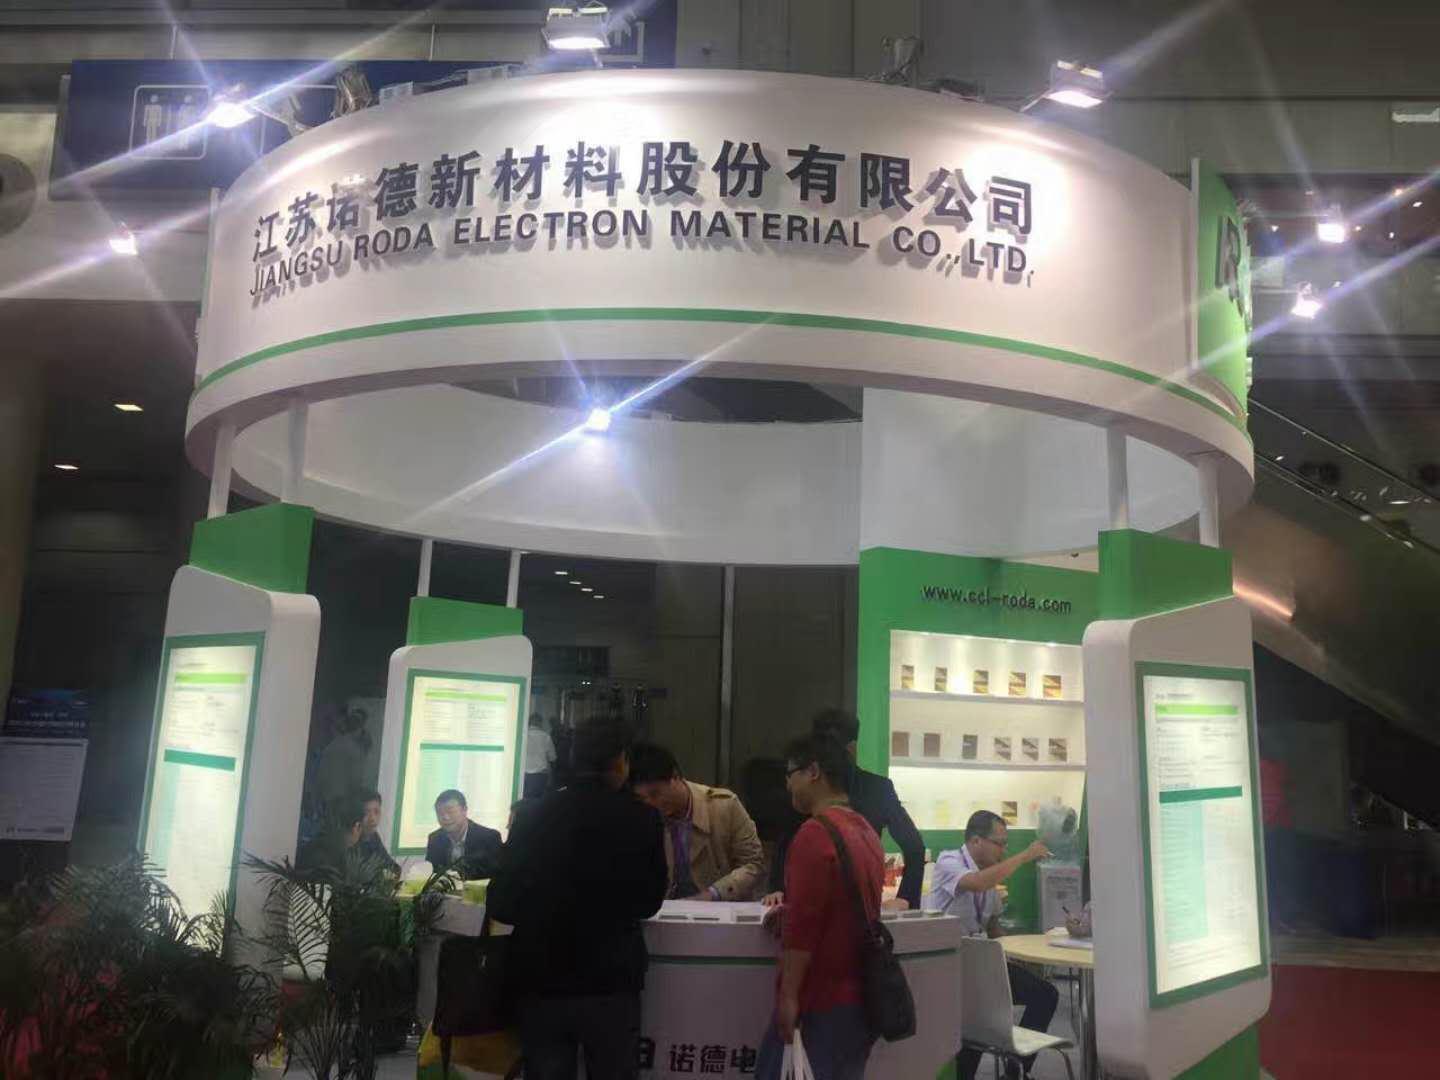 December 7, 2016, Jiangsu Roda New Materials Co., Ltd. at Shenzhen Exhibition.